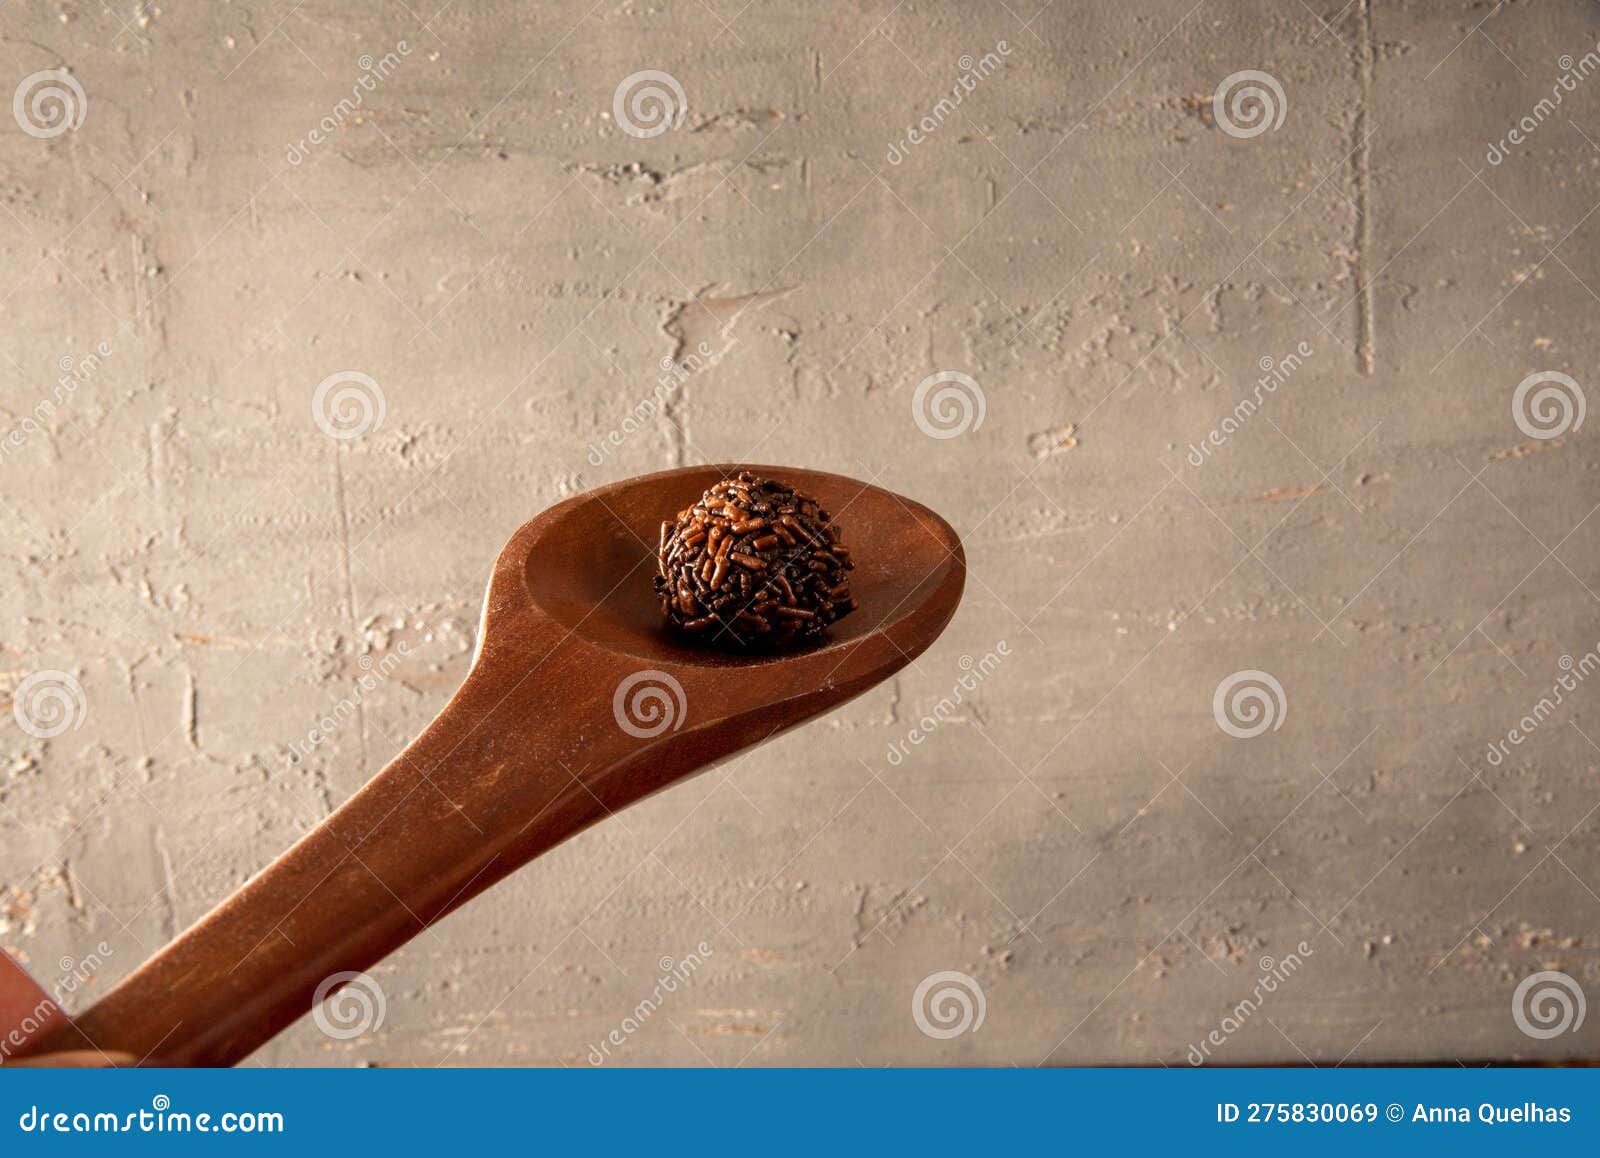 brigadeiro in wooden spoon on gray background